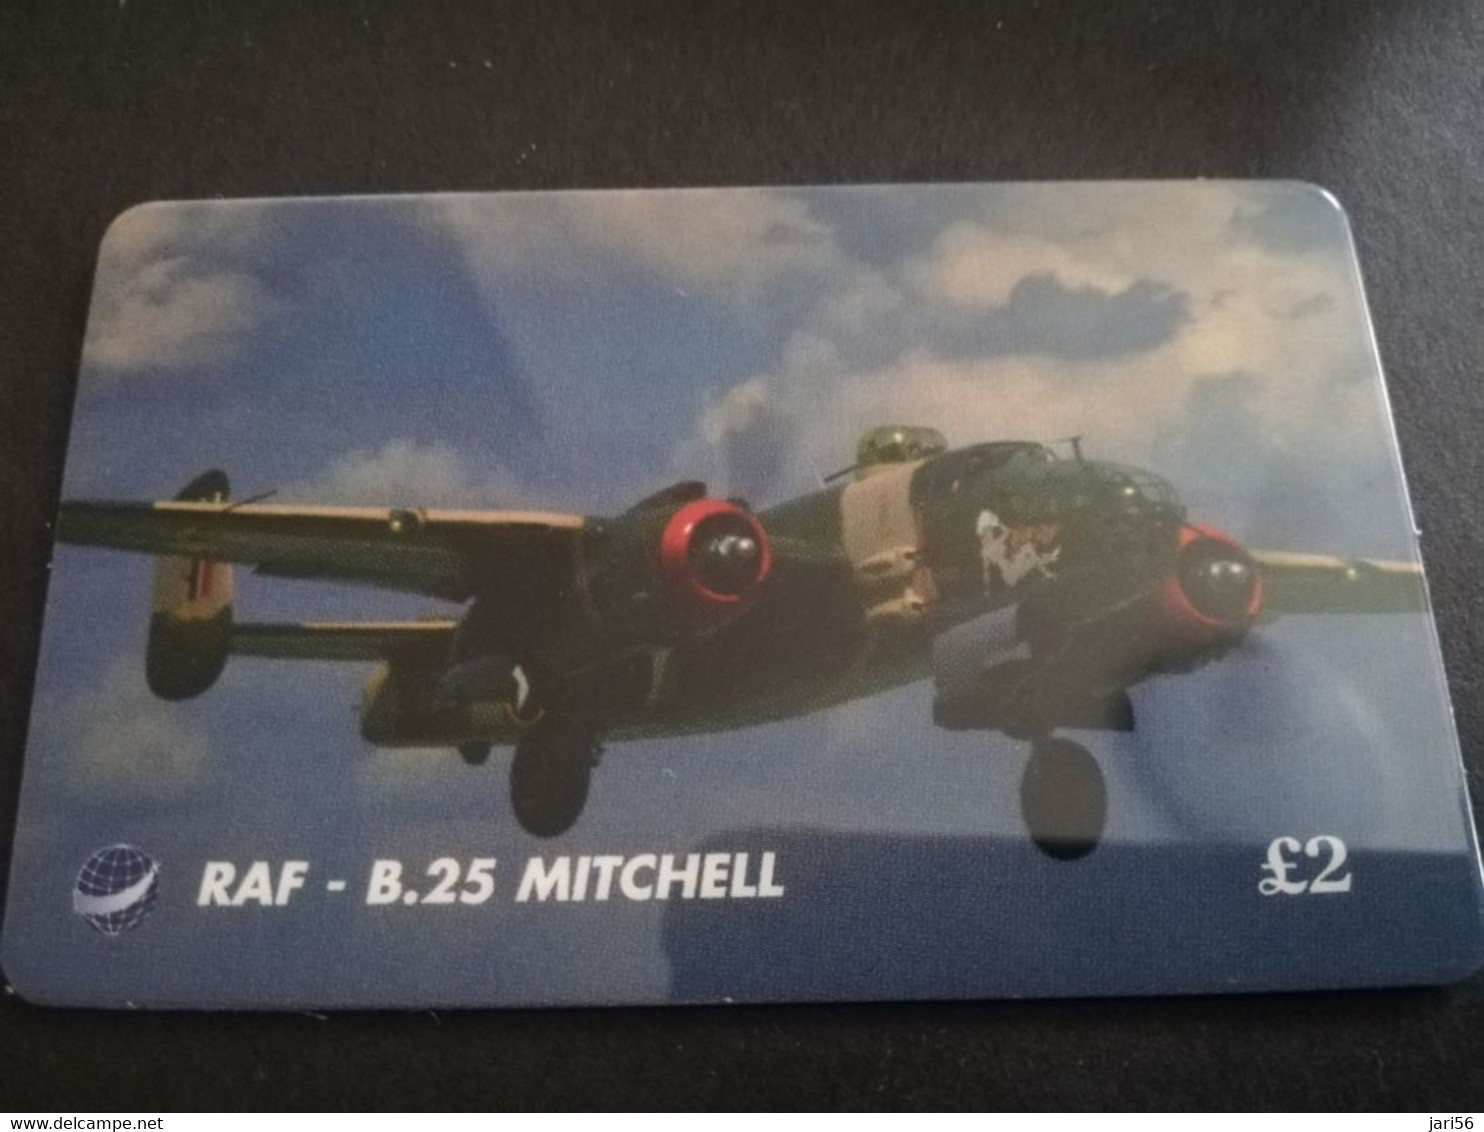 GREAT BRITAIN   2 POUND  AIR PLANES    RAF-B25 MITCHEL  PREPAID CARD      **5443** - [10] Colecciones